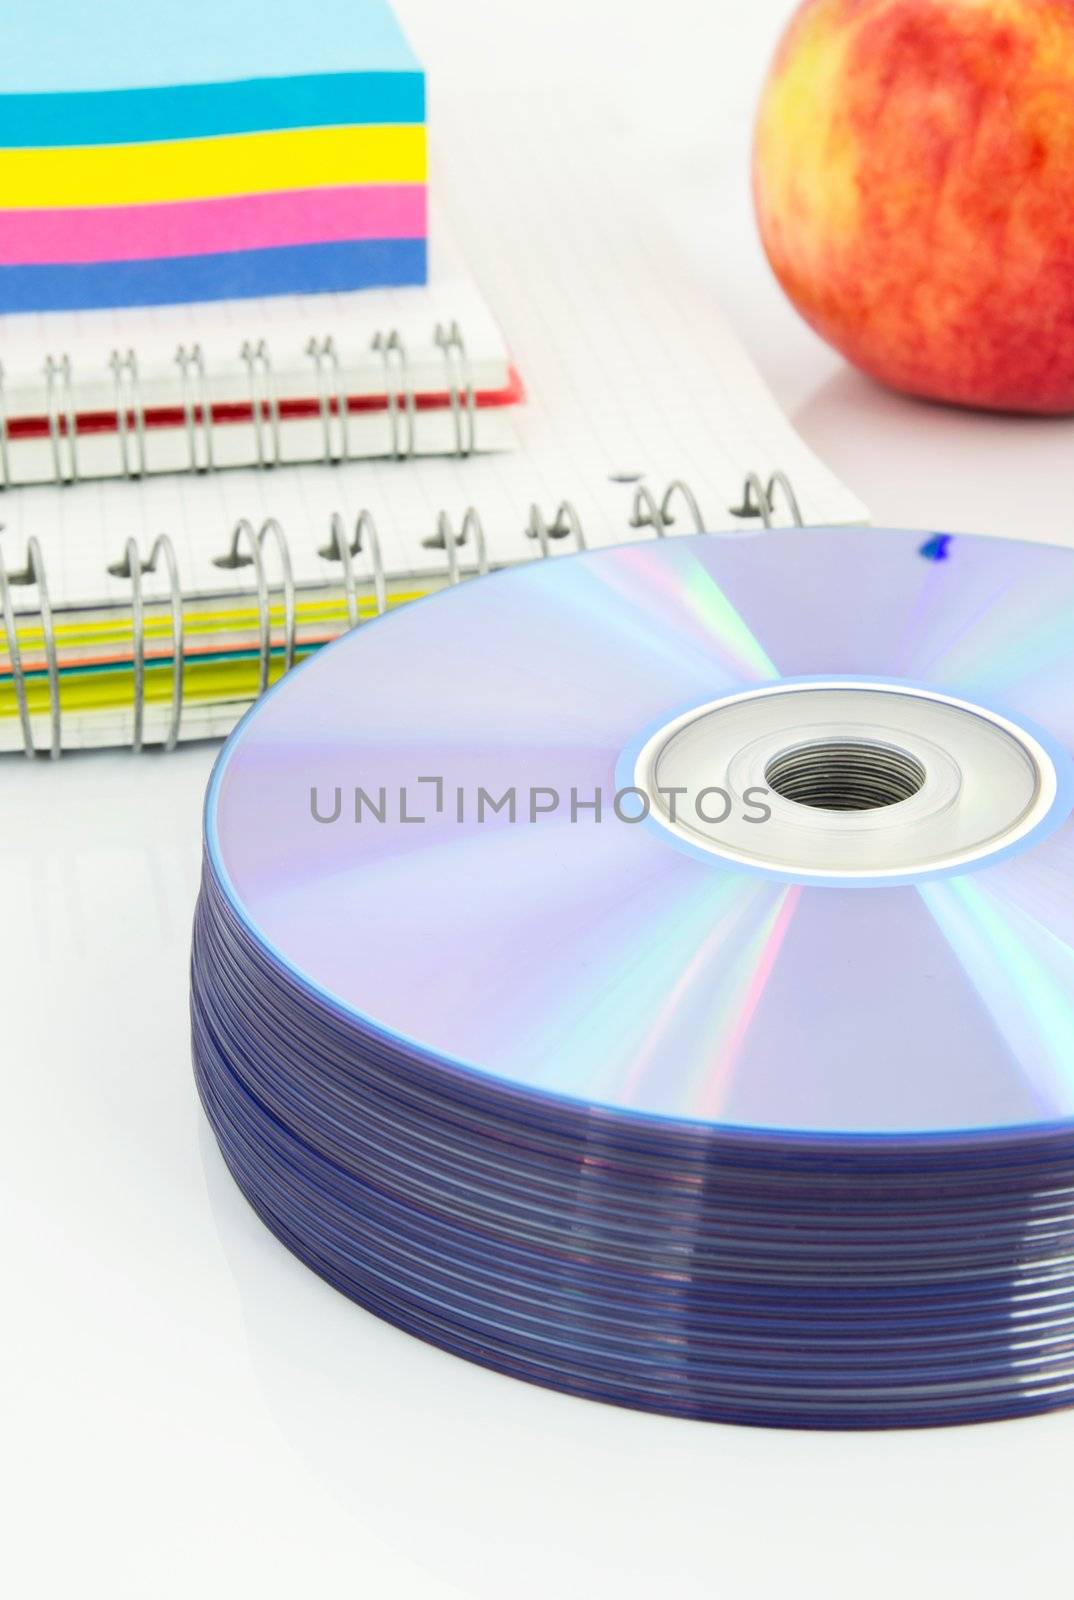 Compact discs, color paper, copybook, apple on white desk by simpson33